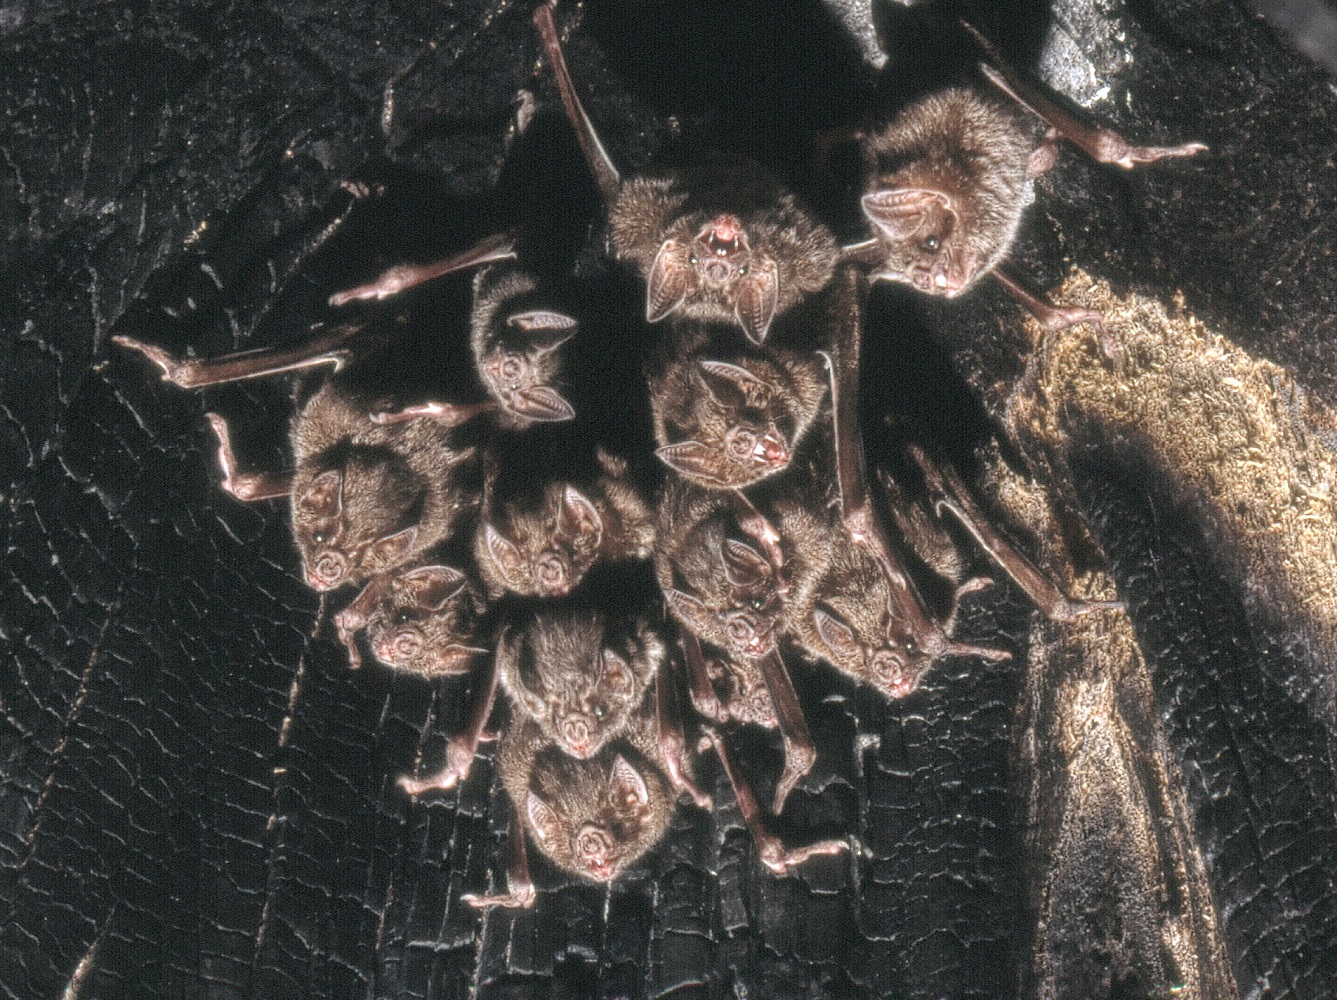 Colonia de murciélago vampiro común (Desmodus rotundus) en un árbol – Uwe Schmidt vía Wikimedia Commons